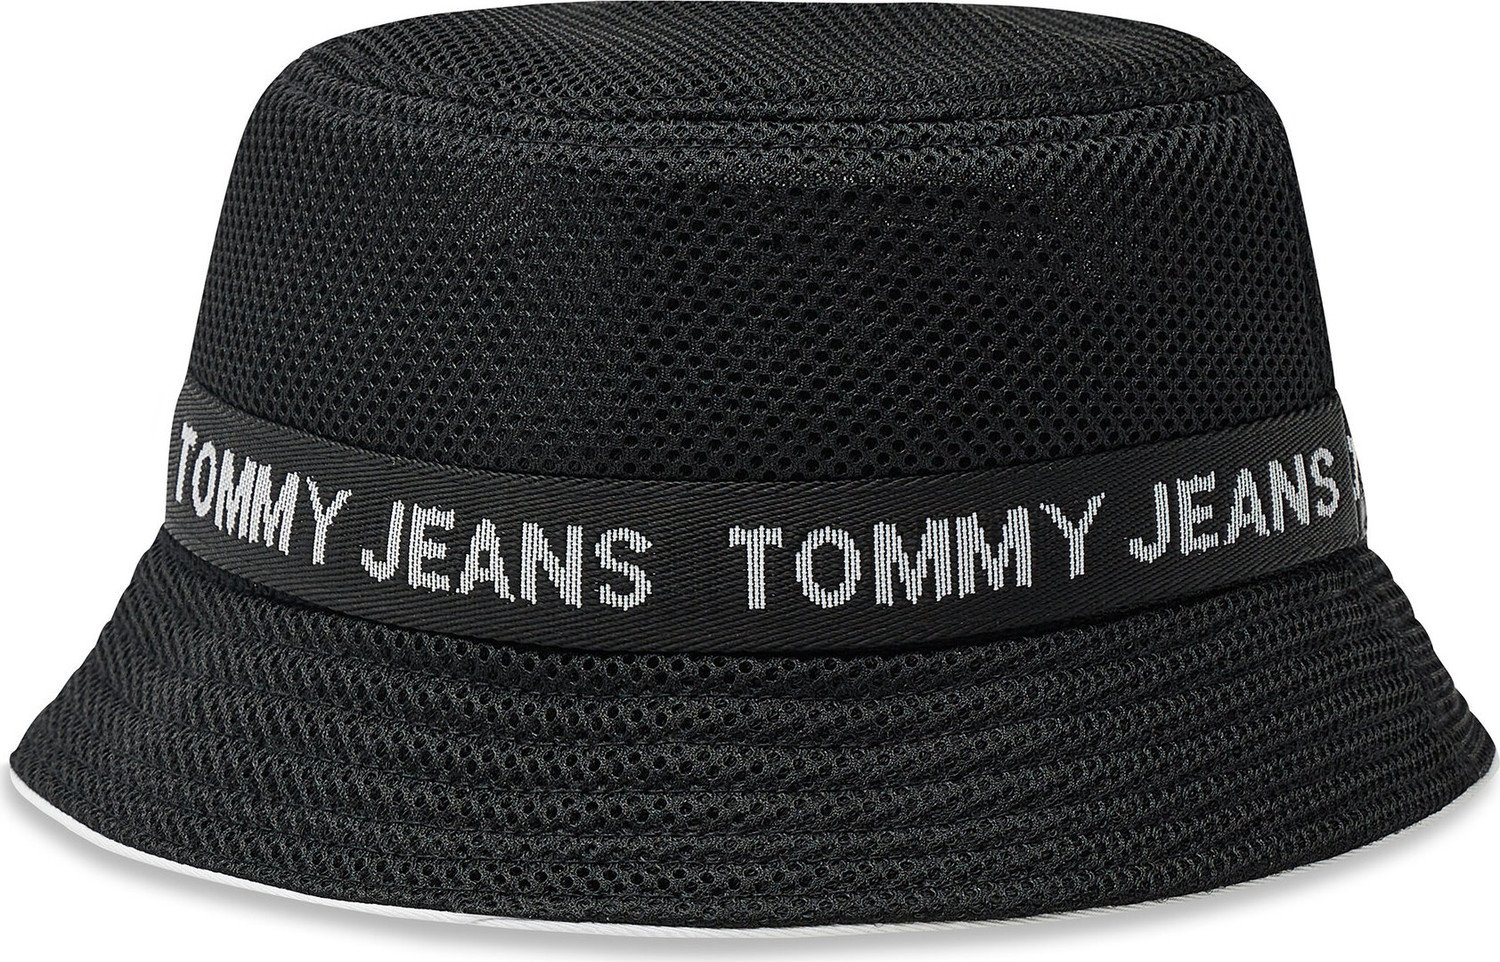 Klobouk Tommy Jeans Bucket Sport AM0AM11007 Black BDS